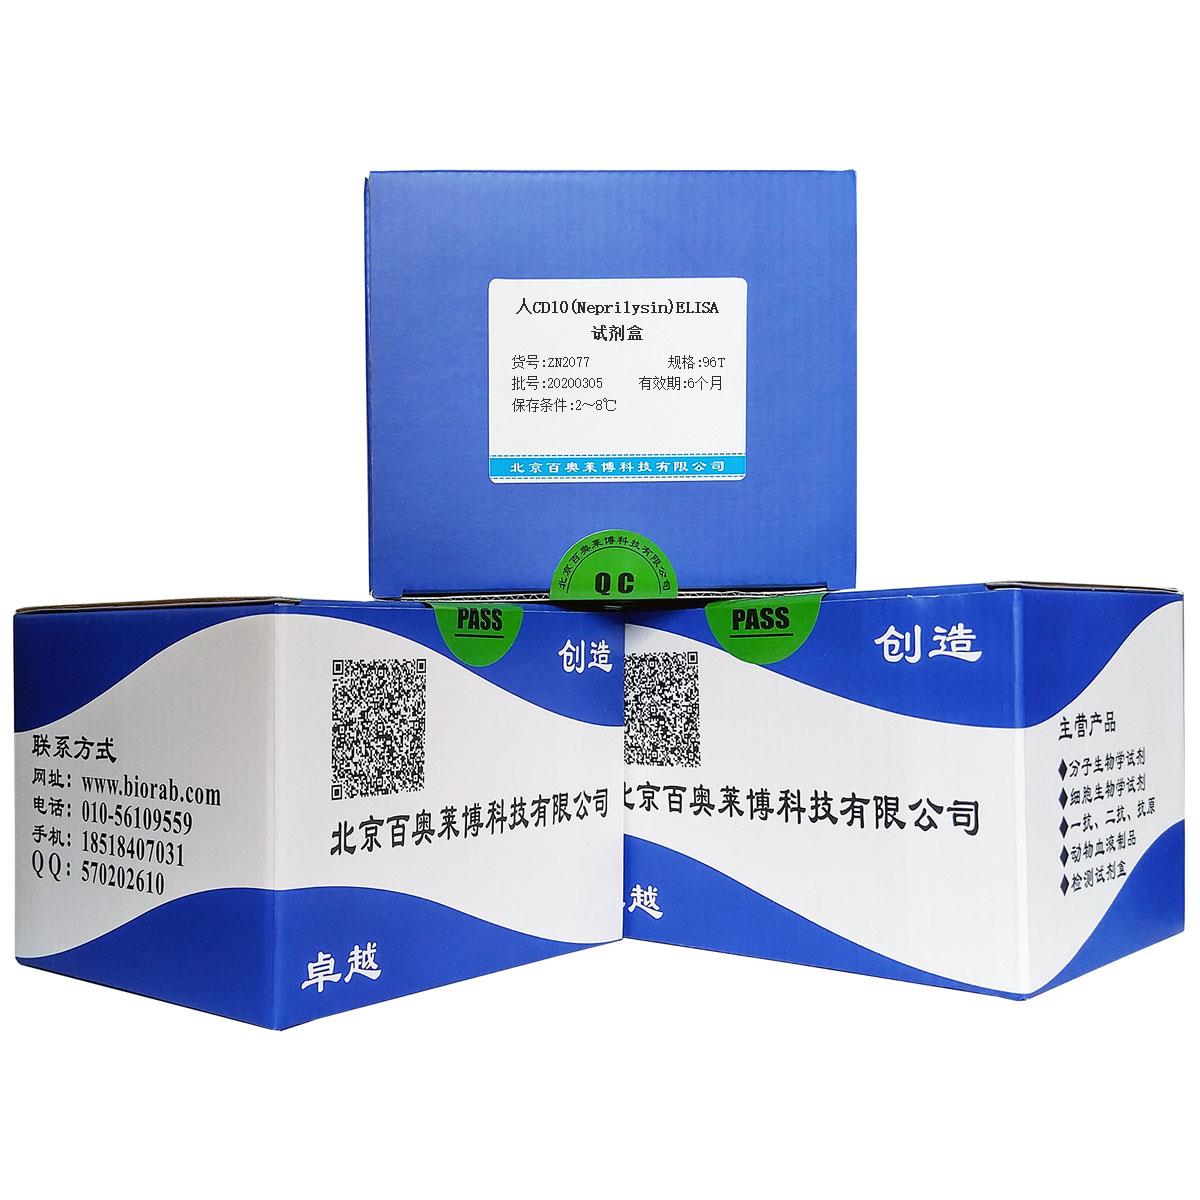 人CD10(Neprilysin)ELISA试剂盒